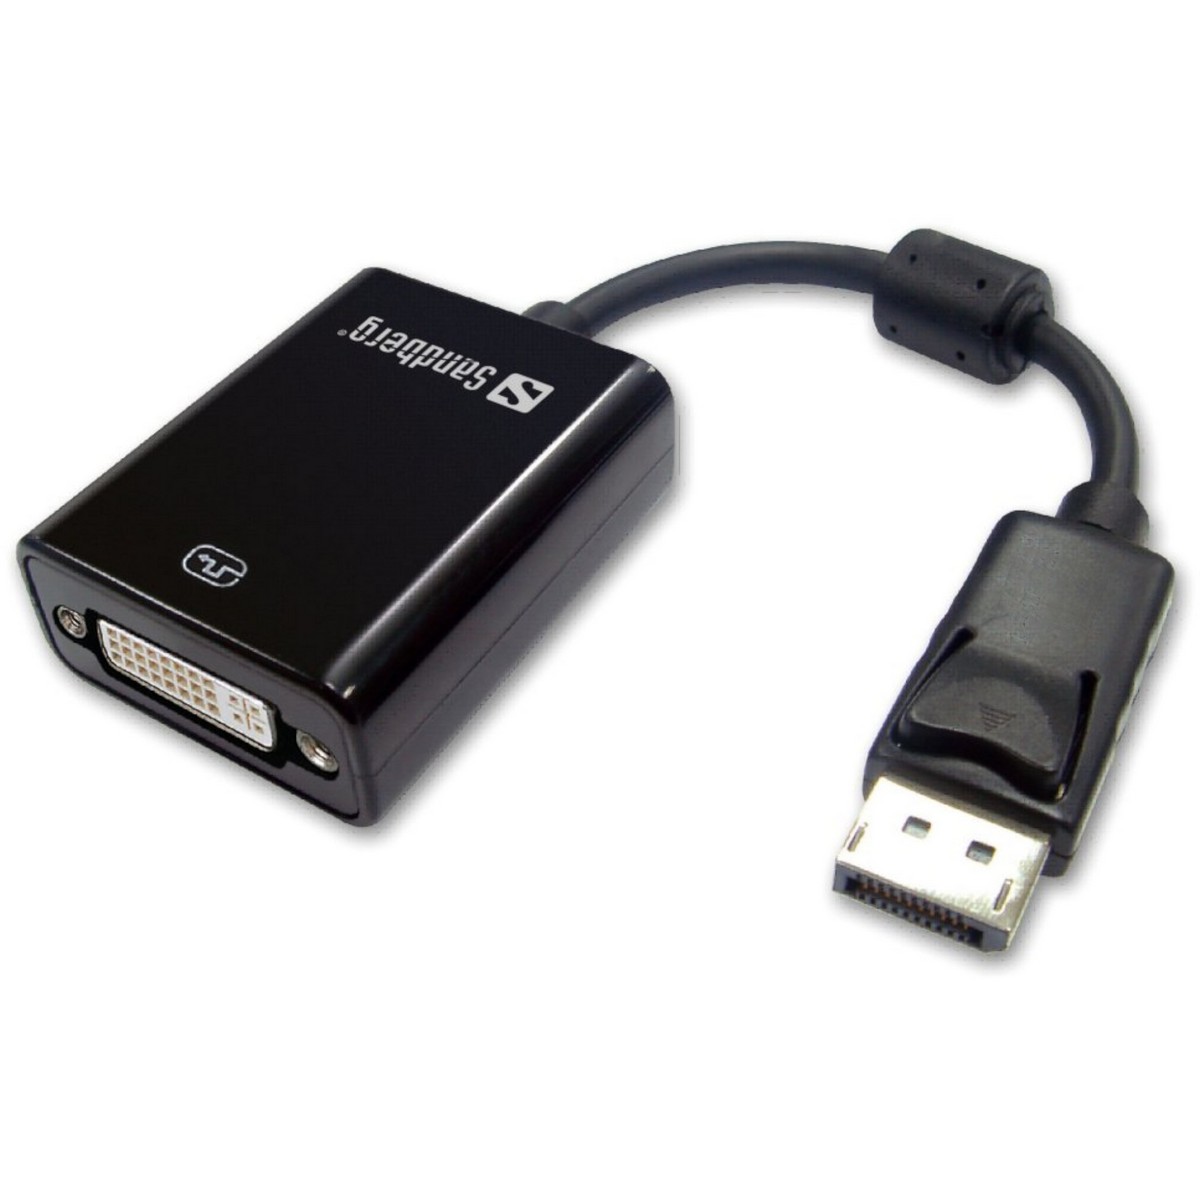 Sandberg DisplayPort Male to DVI-I Female Converter Cable